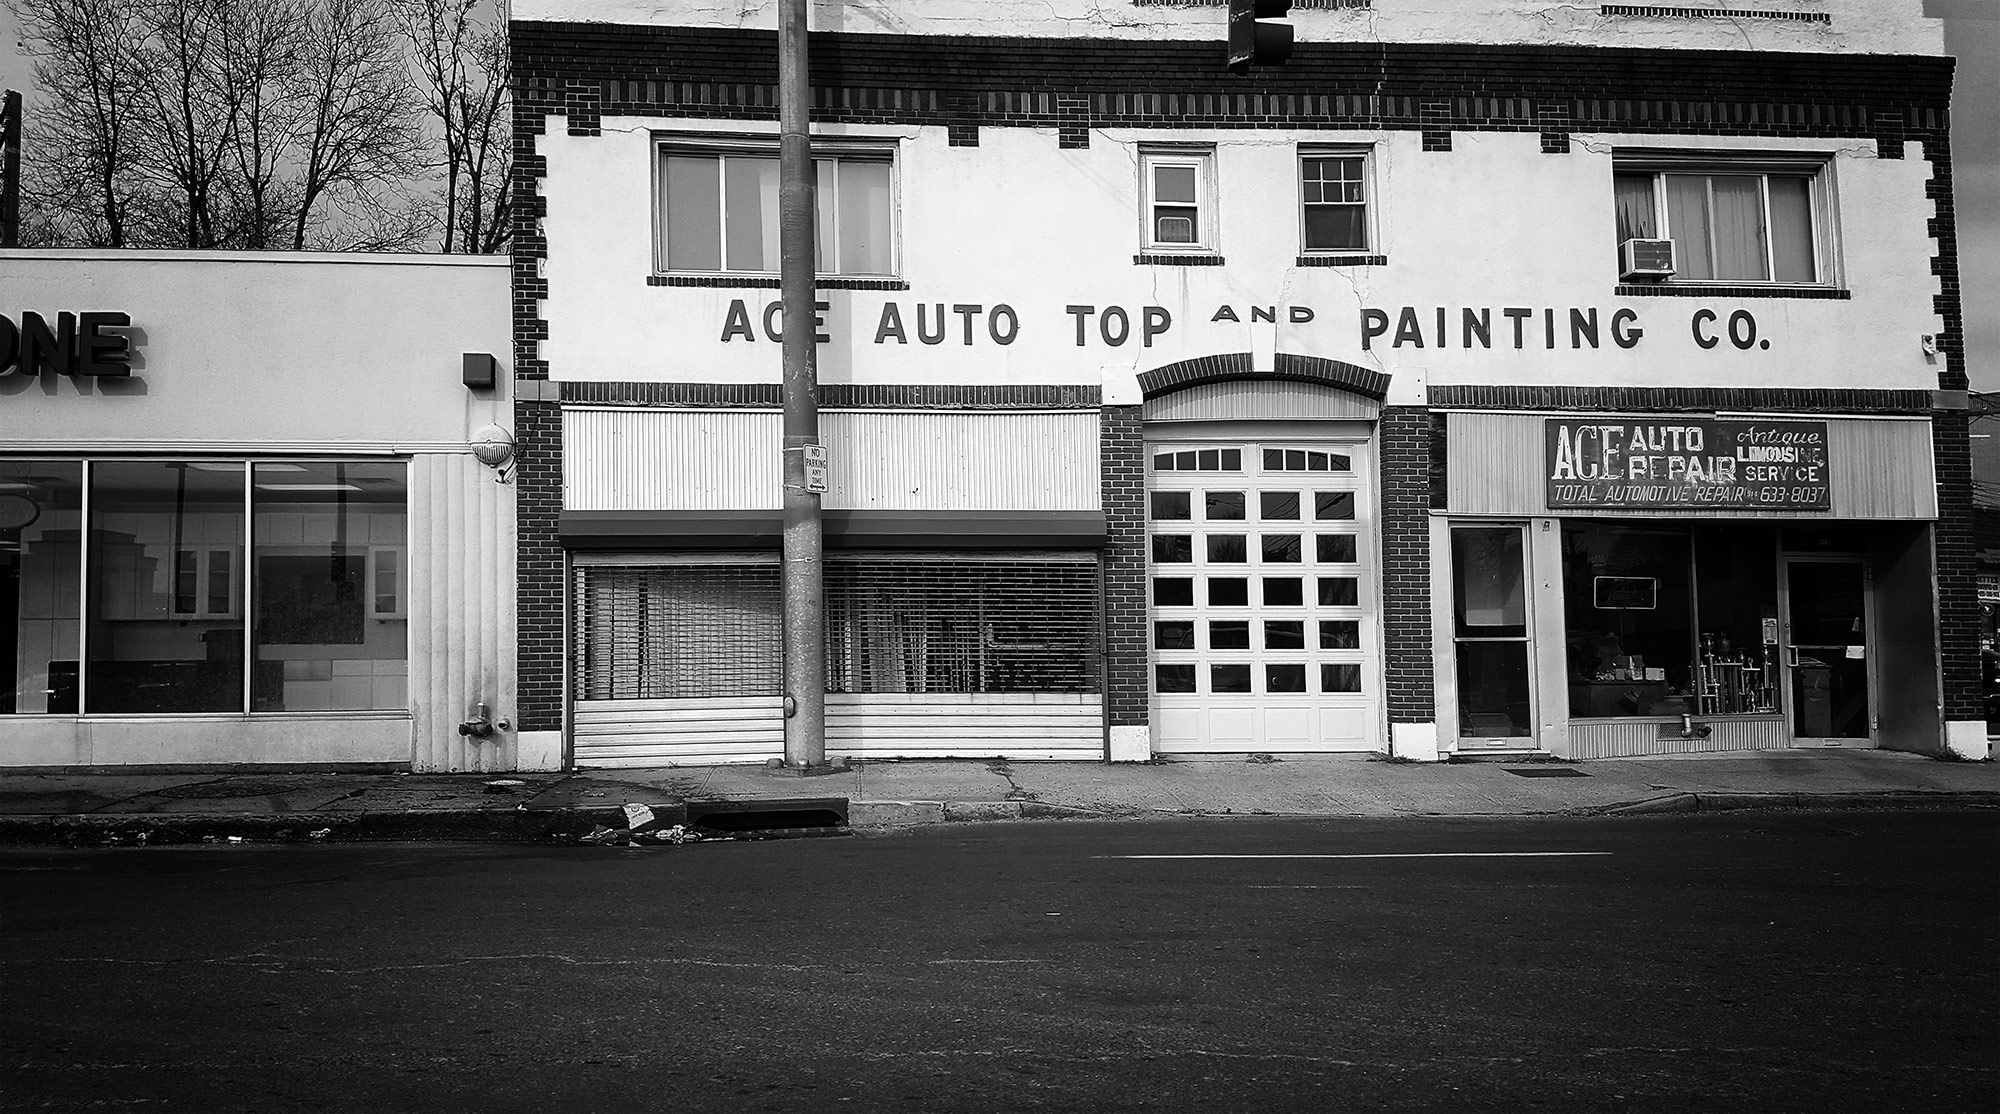 Ace Auto Top©2017 bret wills